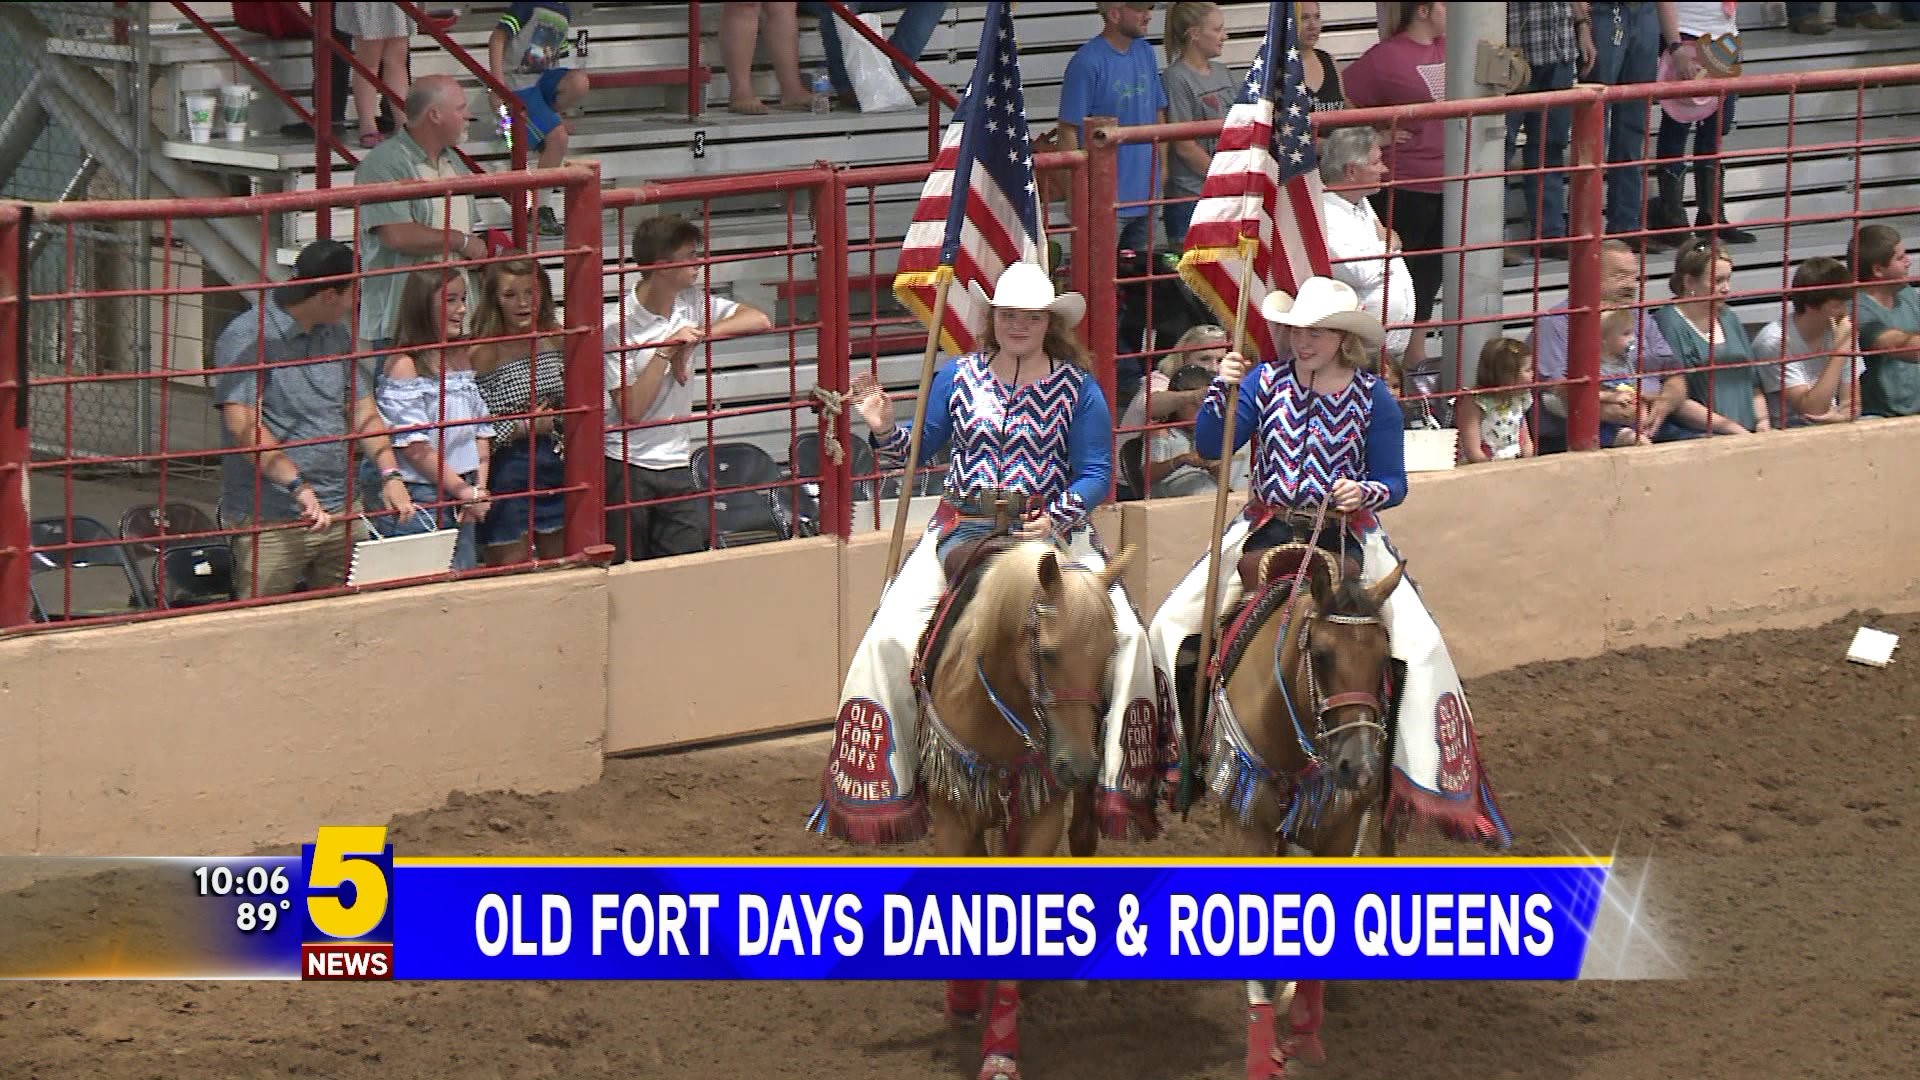 An Inside Look Old Fort Days Dandies & Rodeo Queens